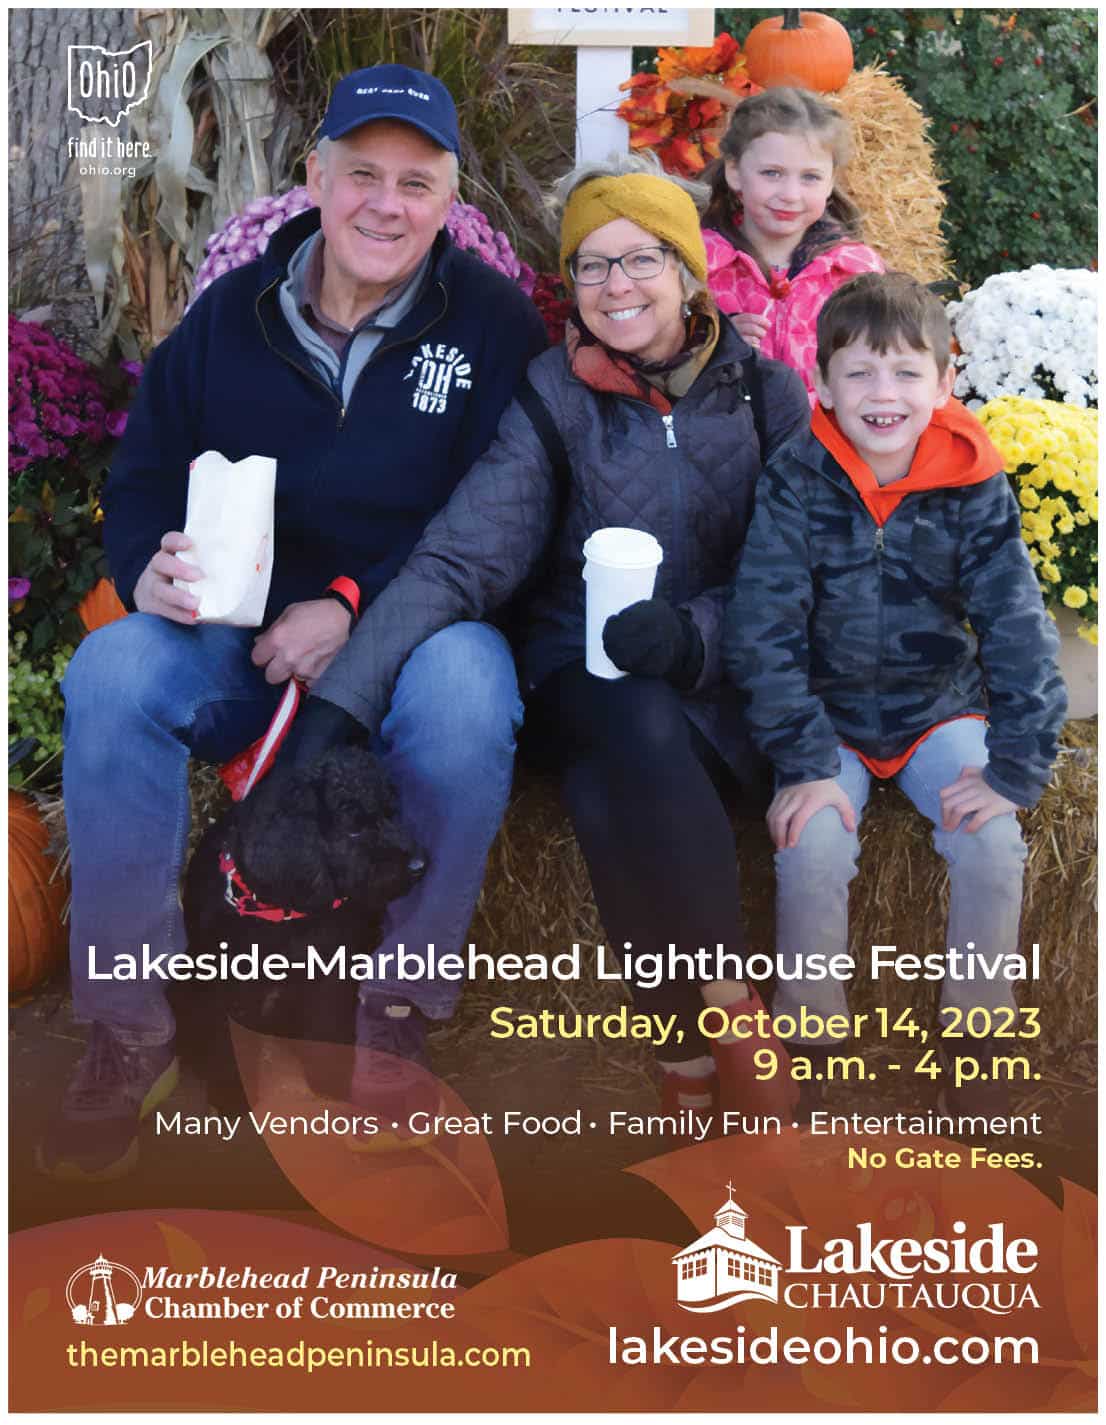 Lakeside-Marblehead Lighthouse Festival